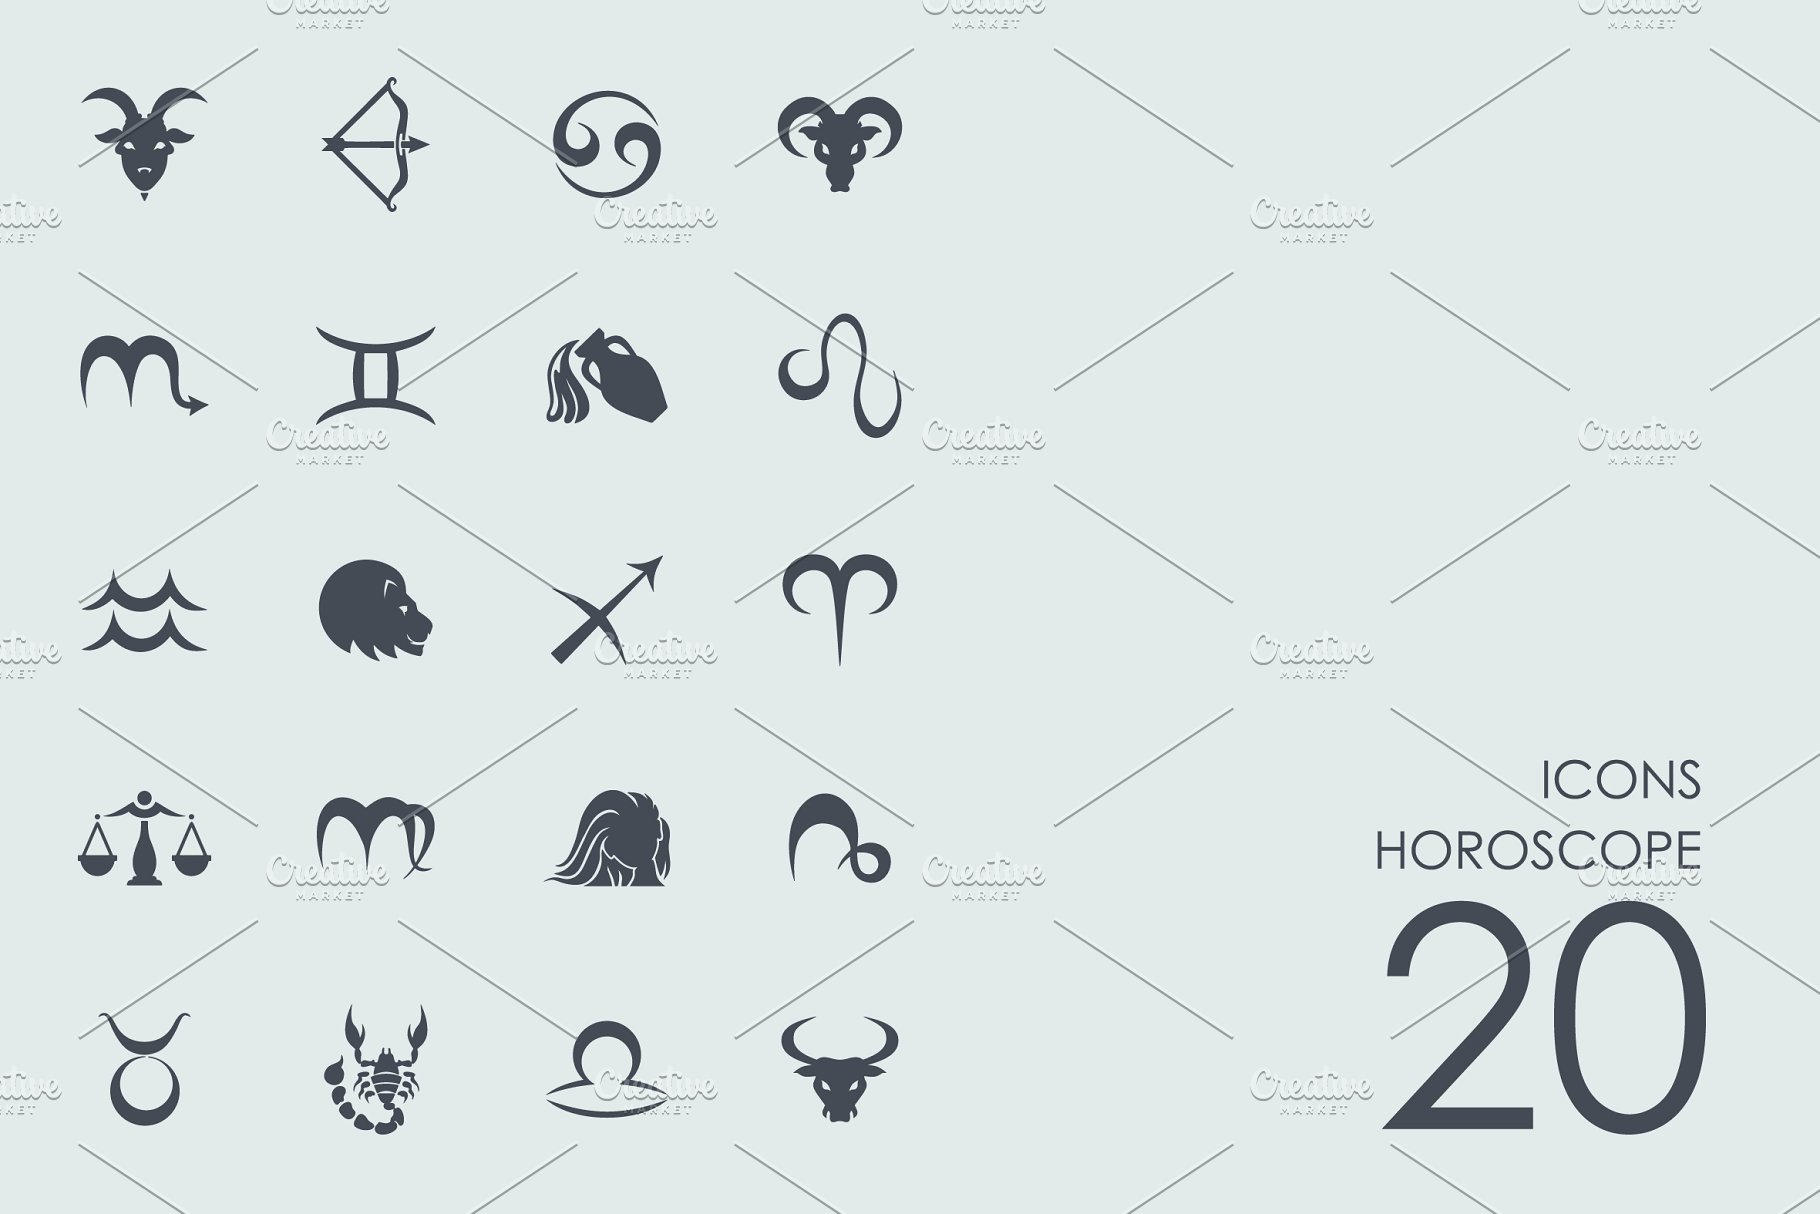 12星座主题图标集 Horoscope icons插图